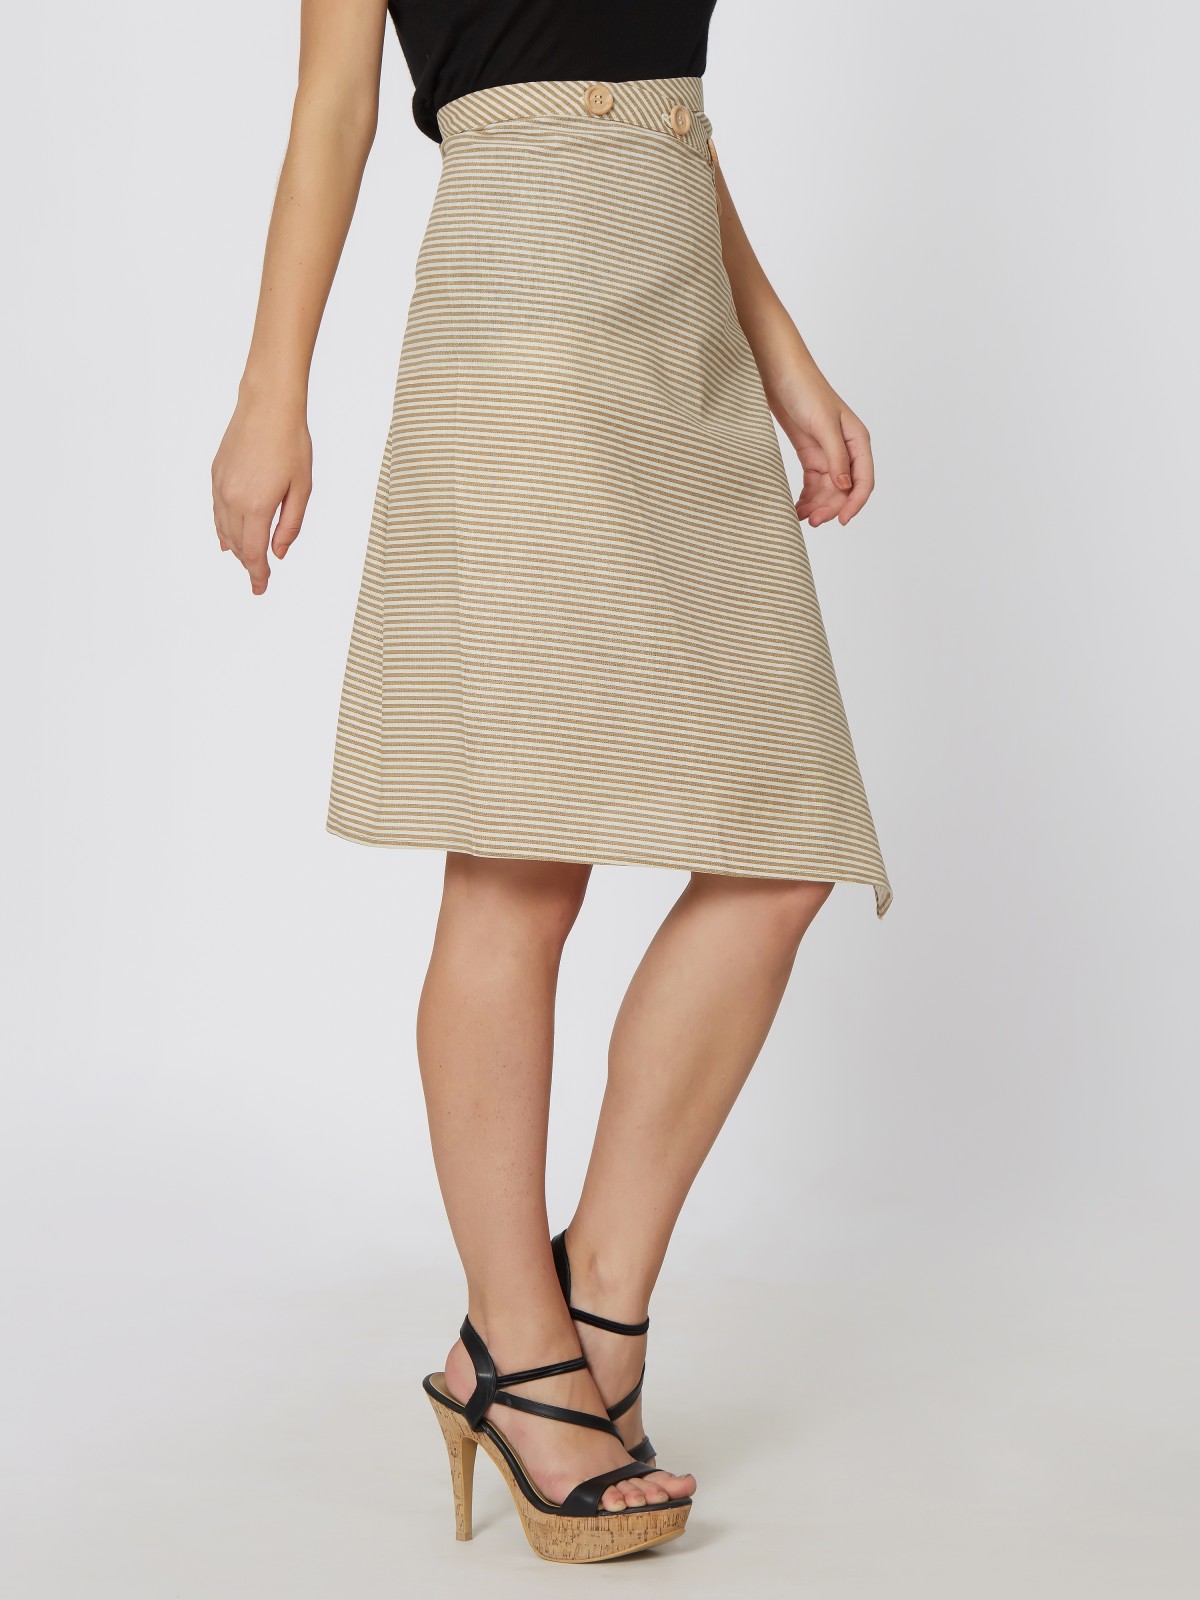 Stylish Cotton Linen Beige Color Striped Women's Skirt